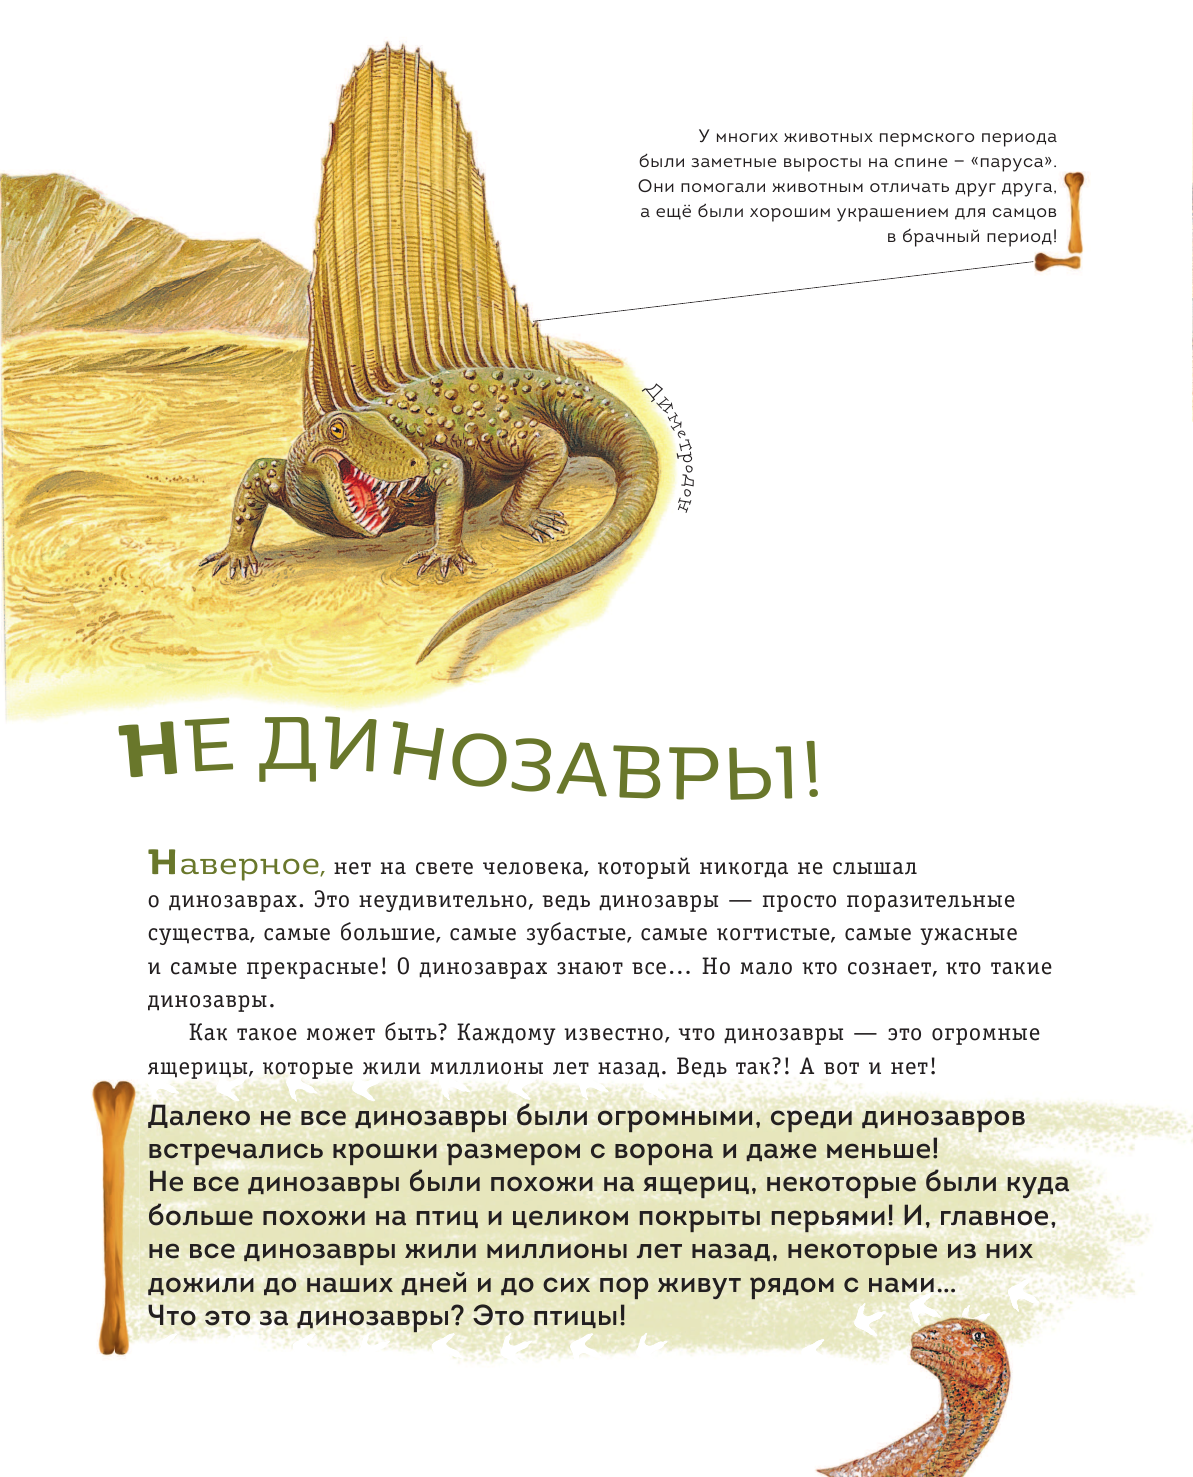 Динозавры триасового периода (Попов Ярослав Александрович) - фото №6